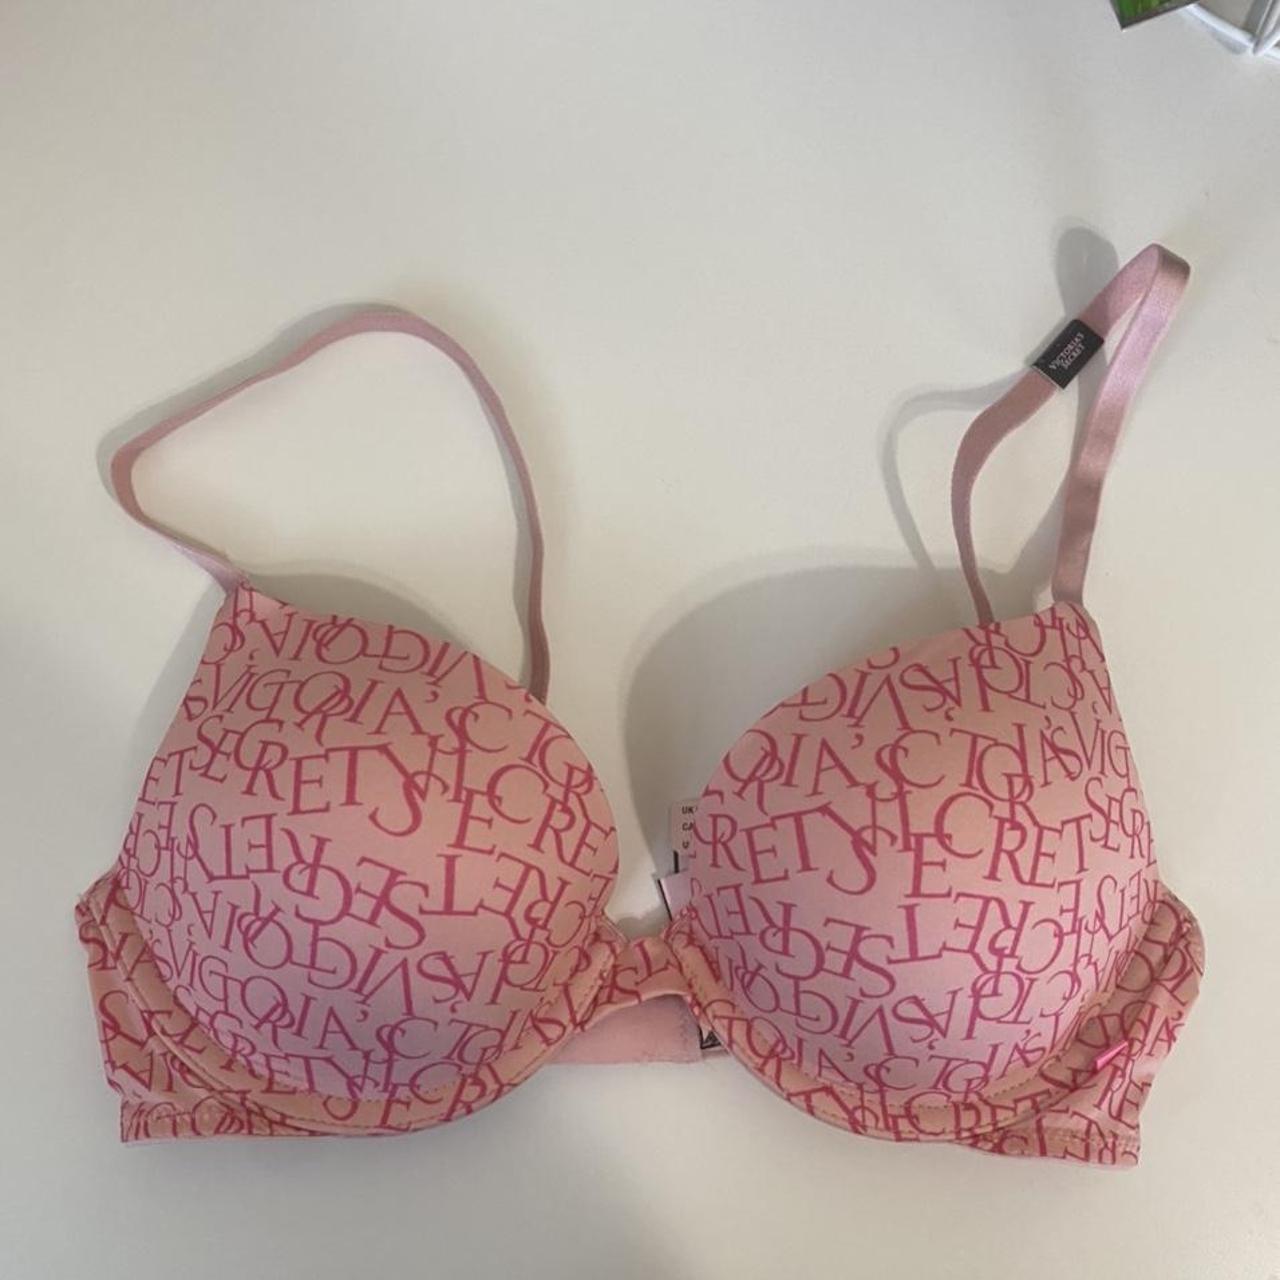 32C bra by Victoria Secret